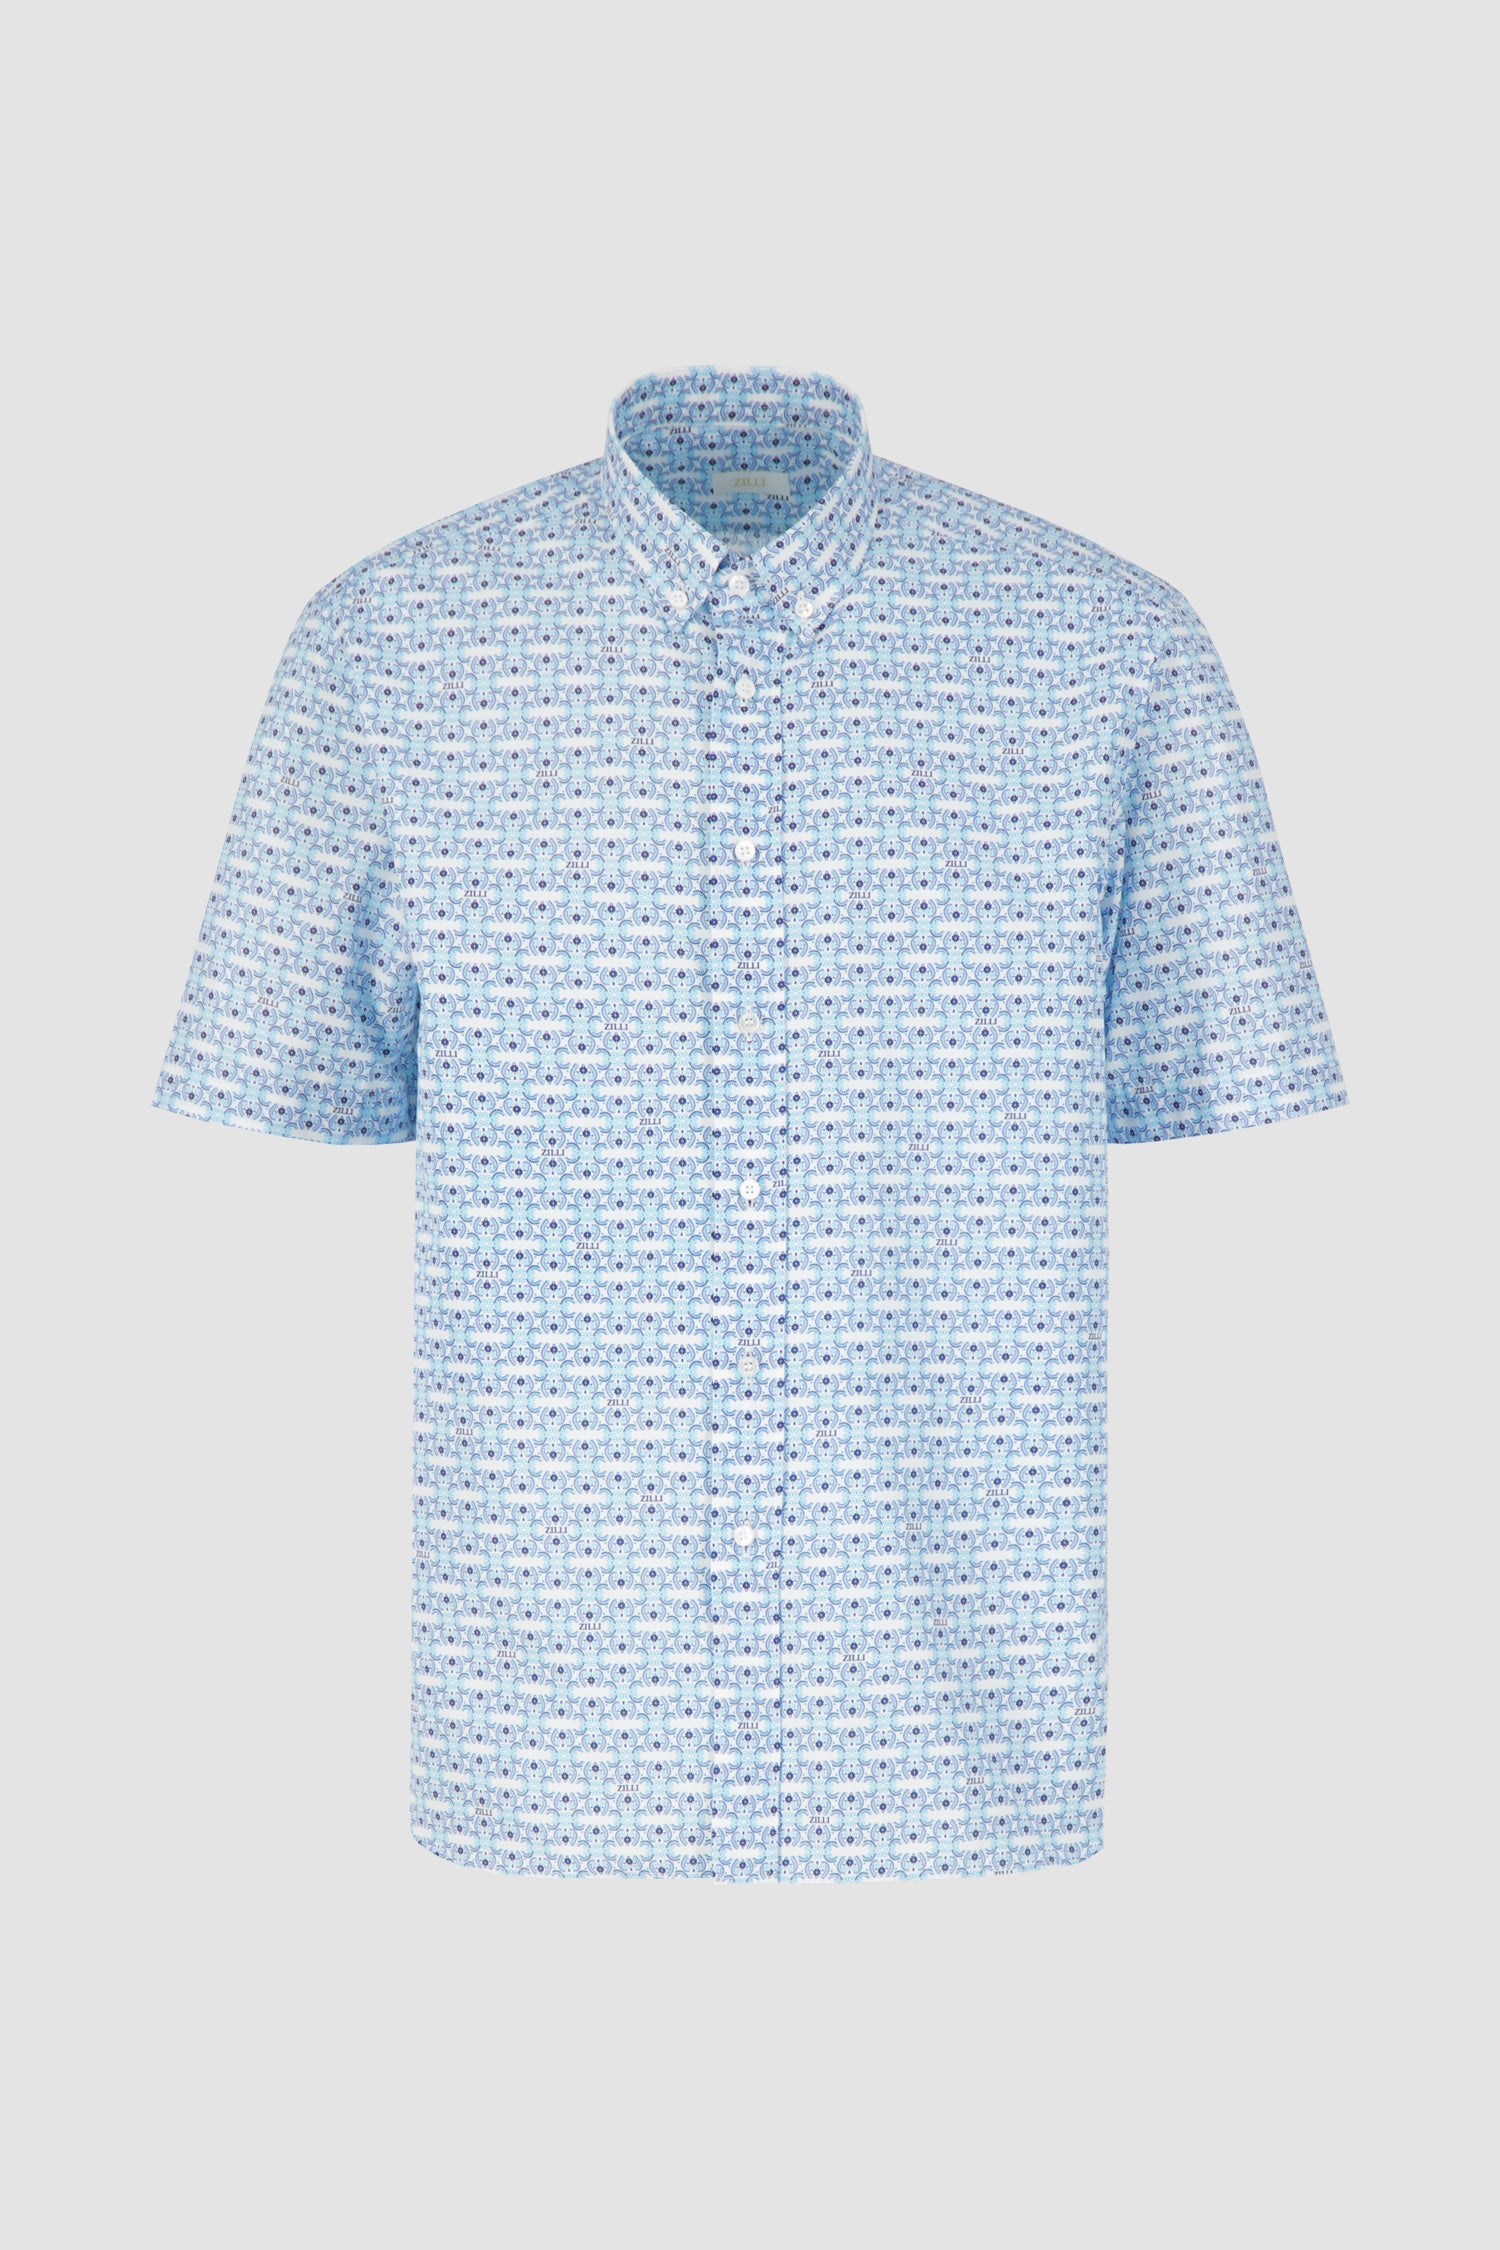 Zilli Blue/White Short Sleeve Shirt